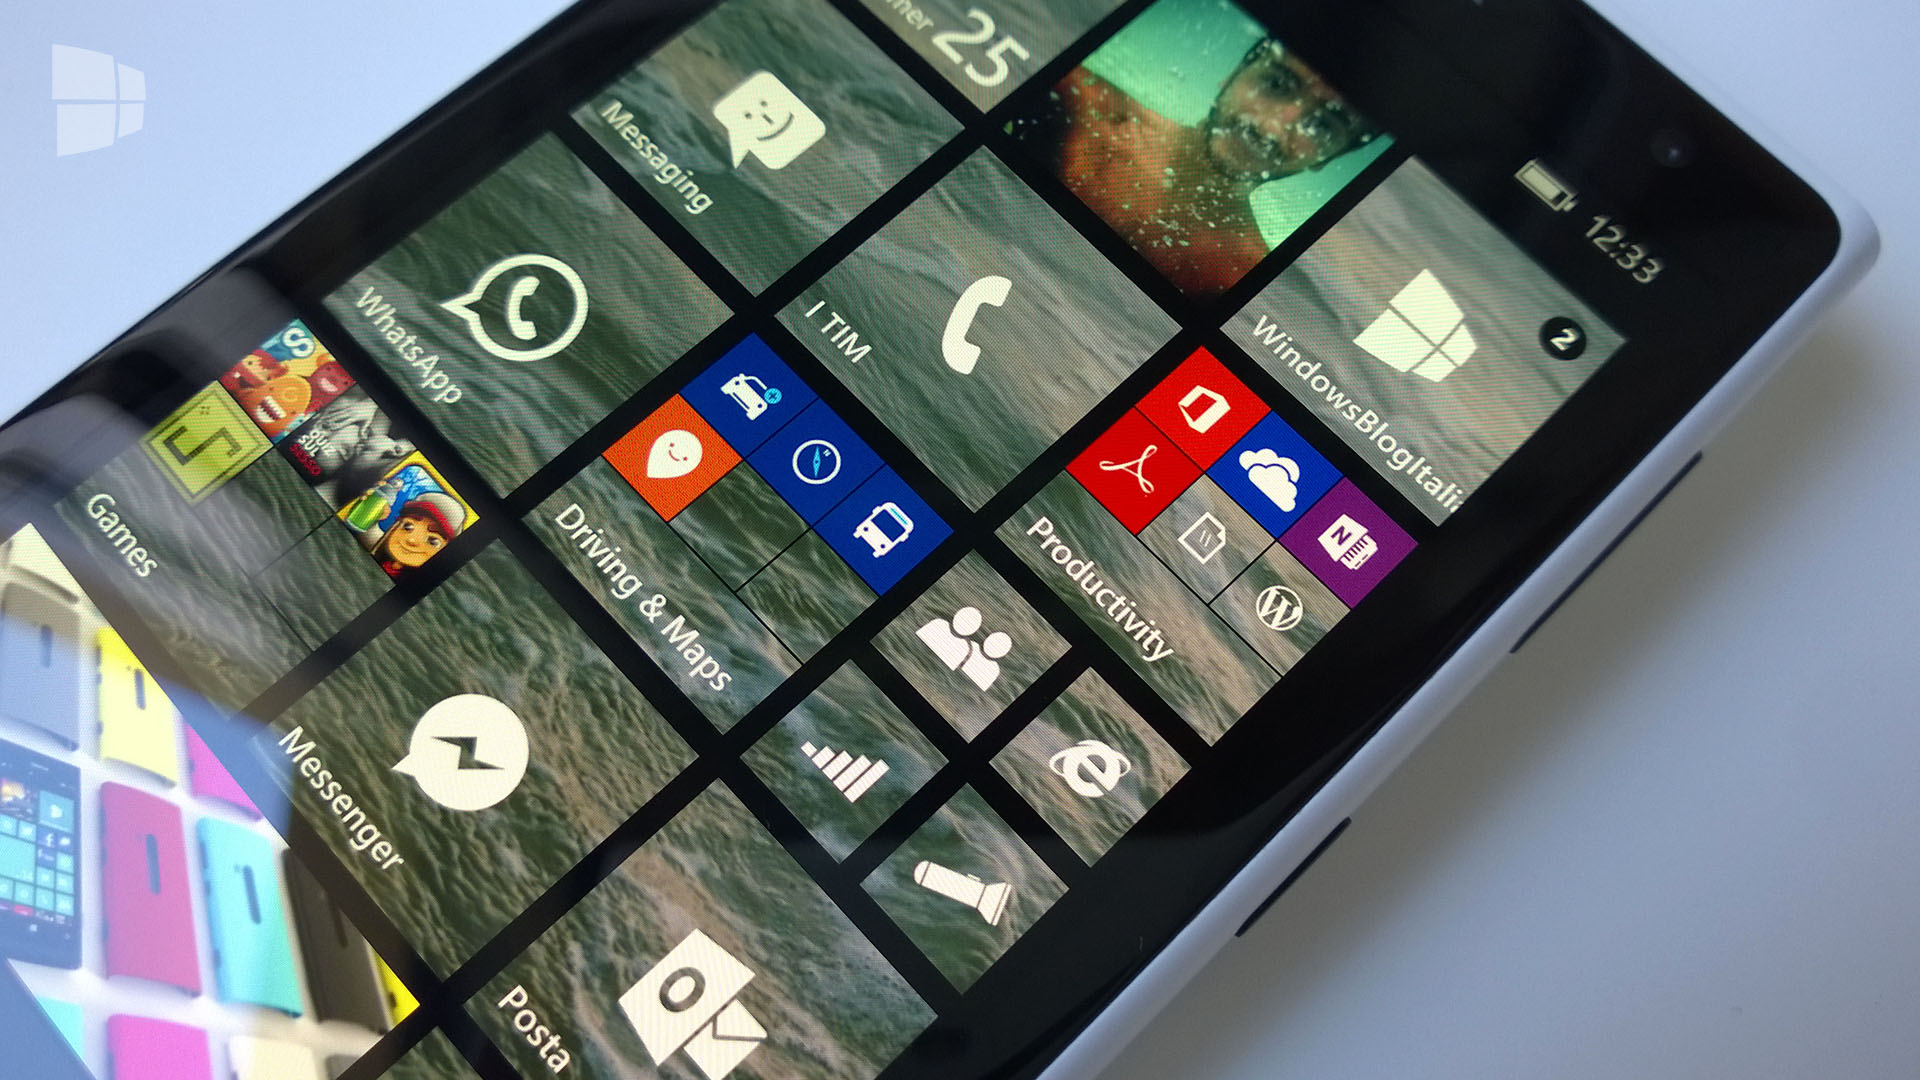 Windows-Phone-8.1-Update-1-Folders